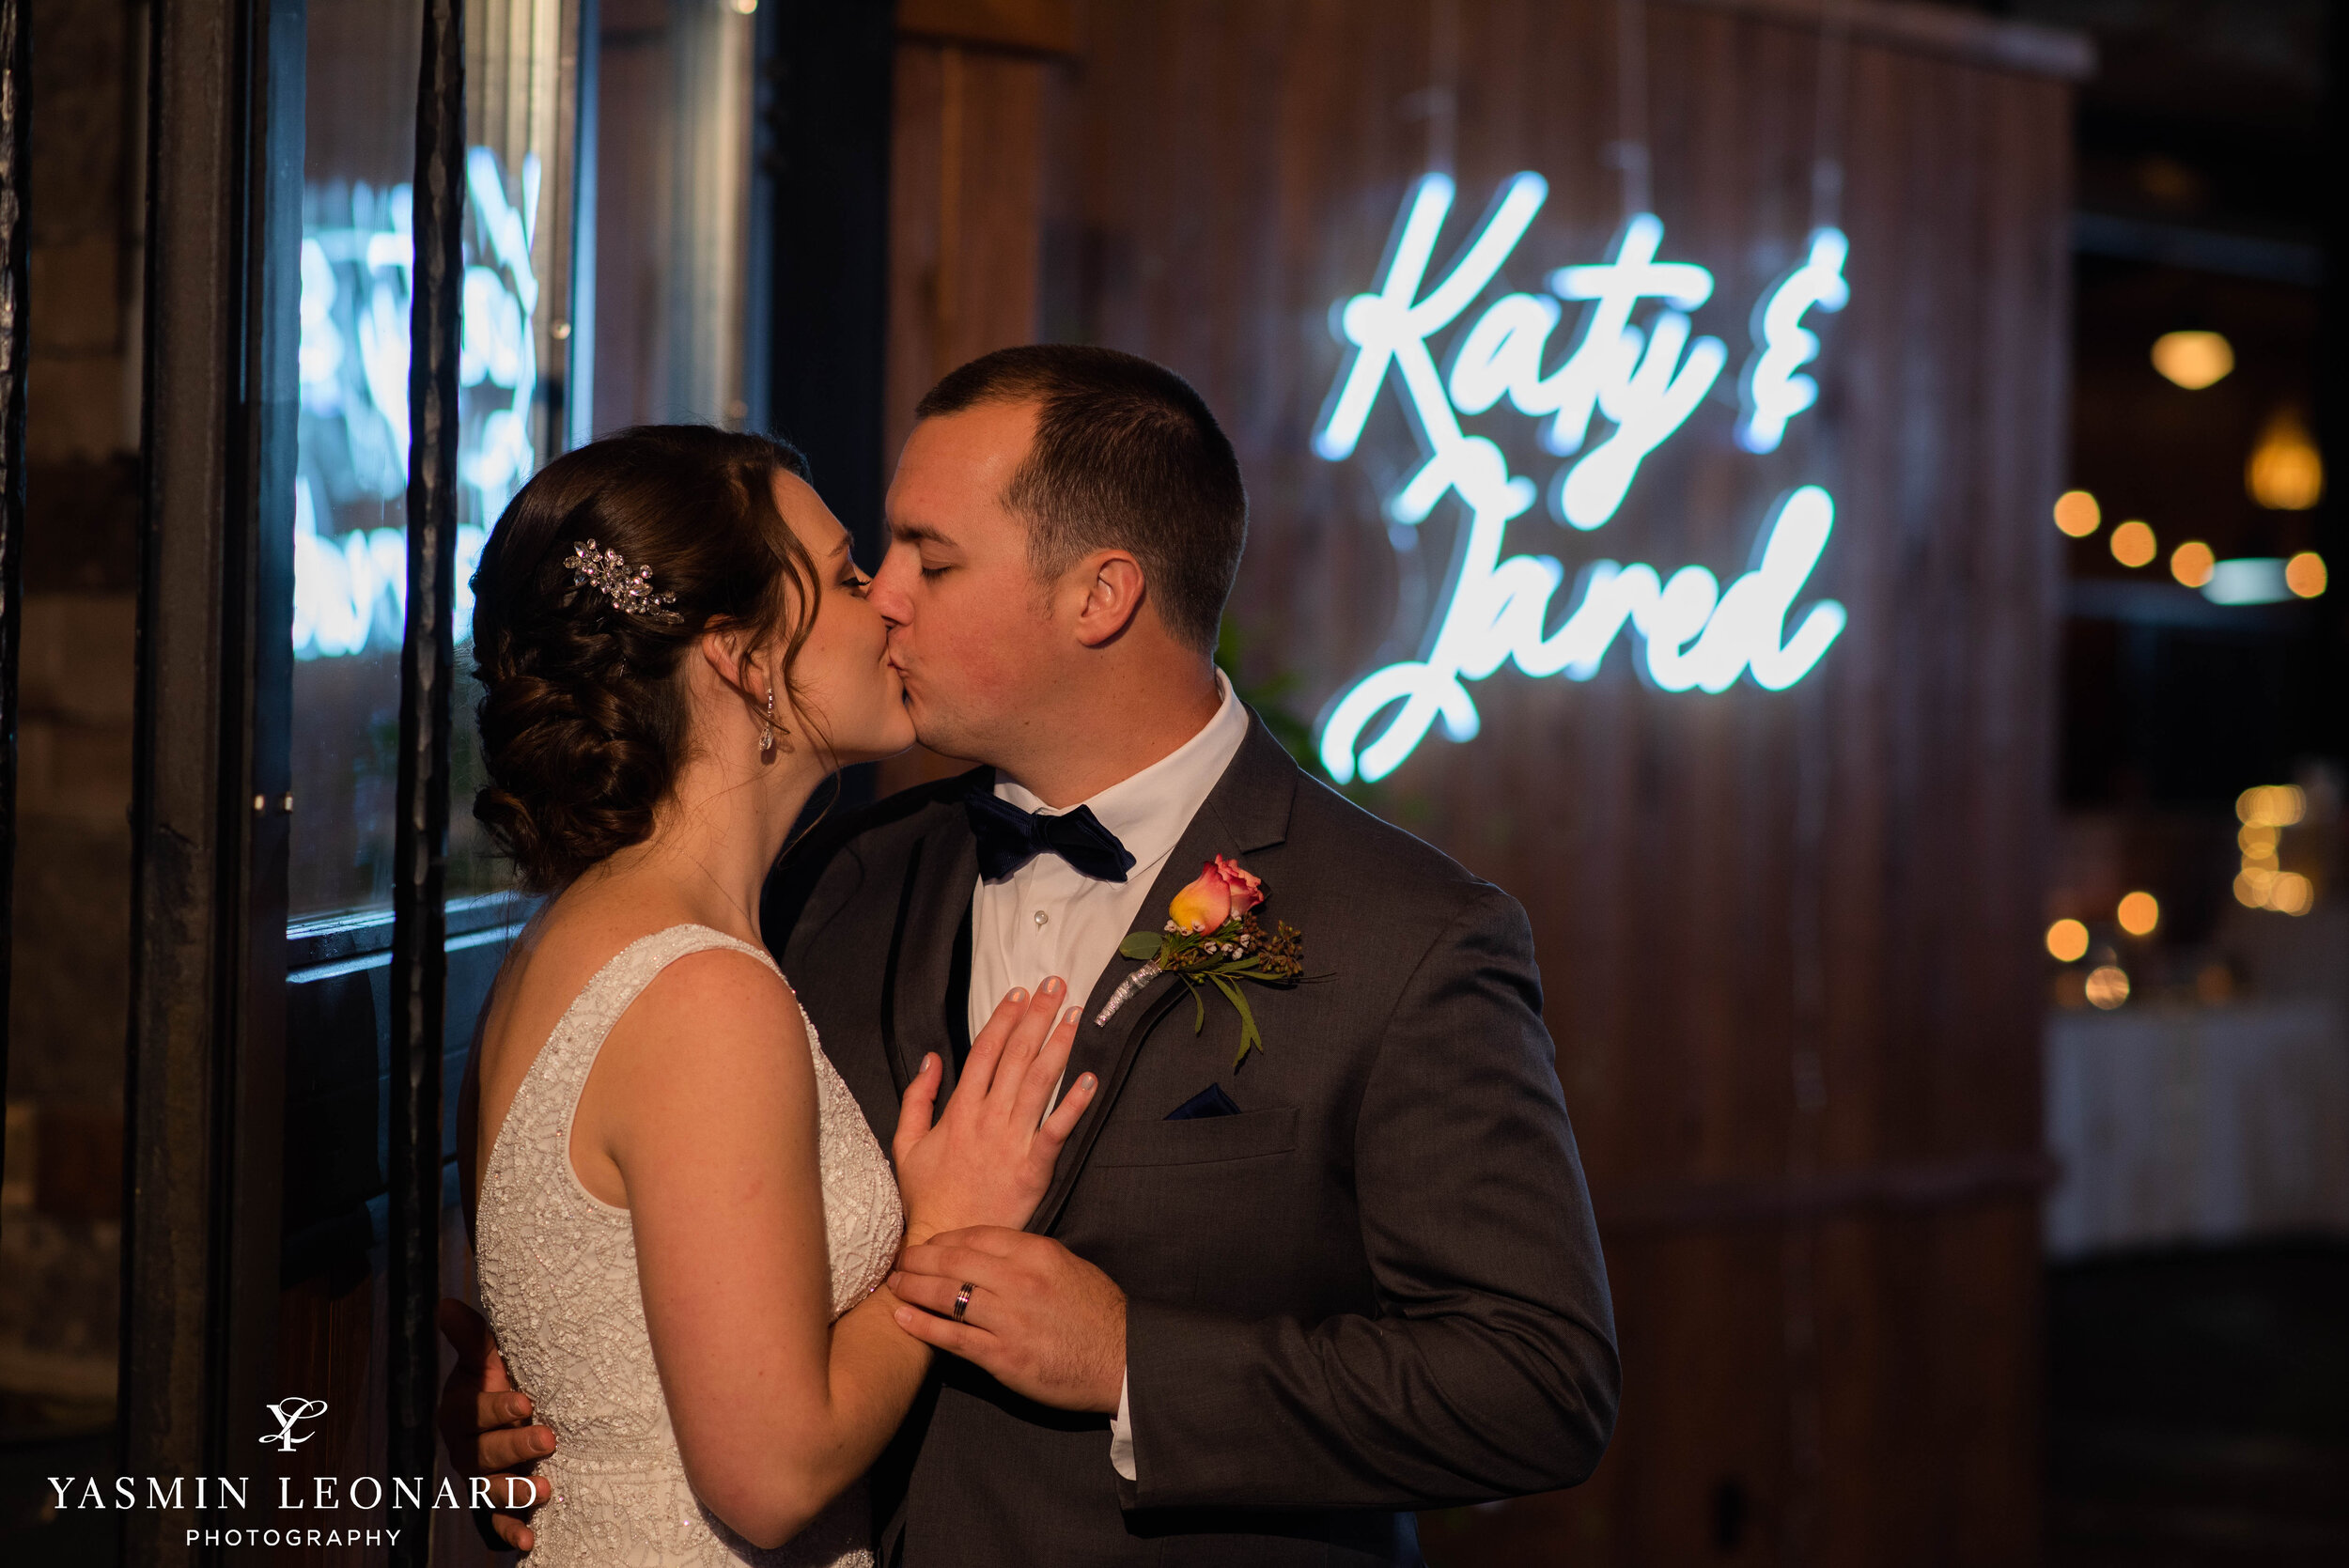 Jared and Katy - Adaumont Farms - High Point Weddings - NC Barn Weddings - Yasmin Leonard Photography-51.jpg